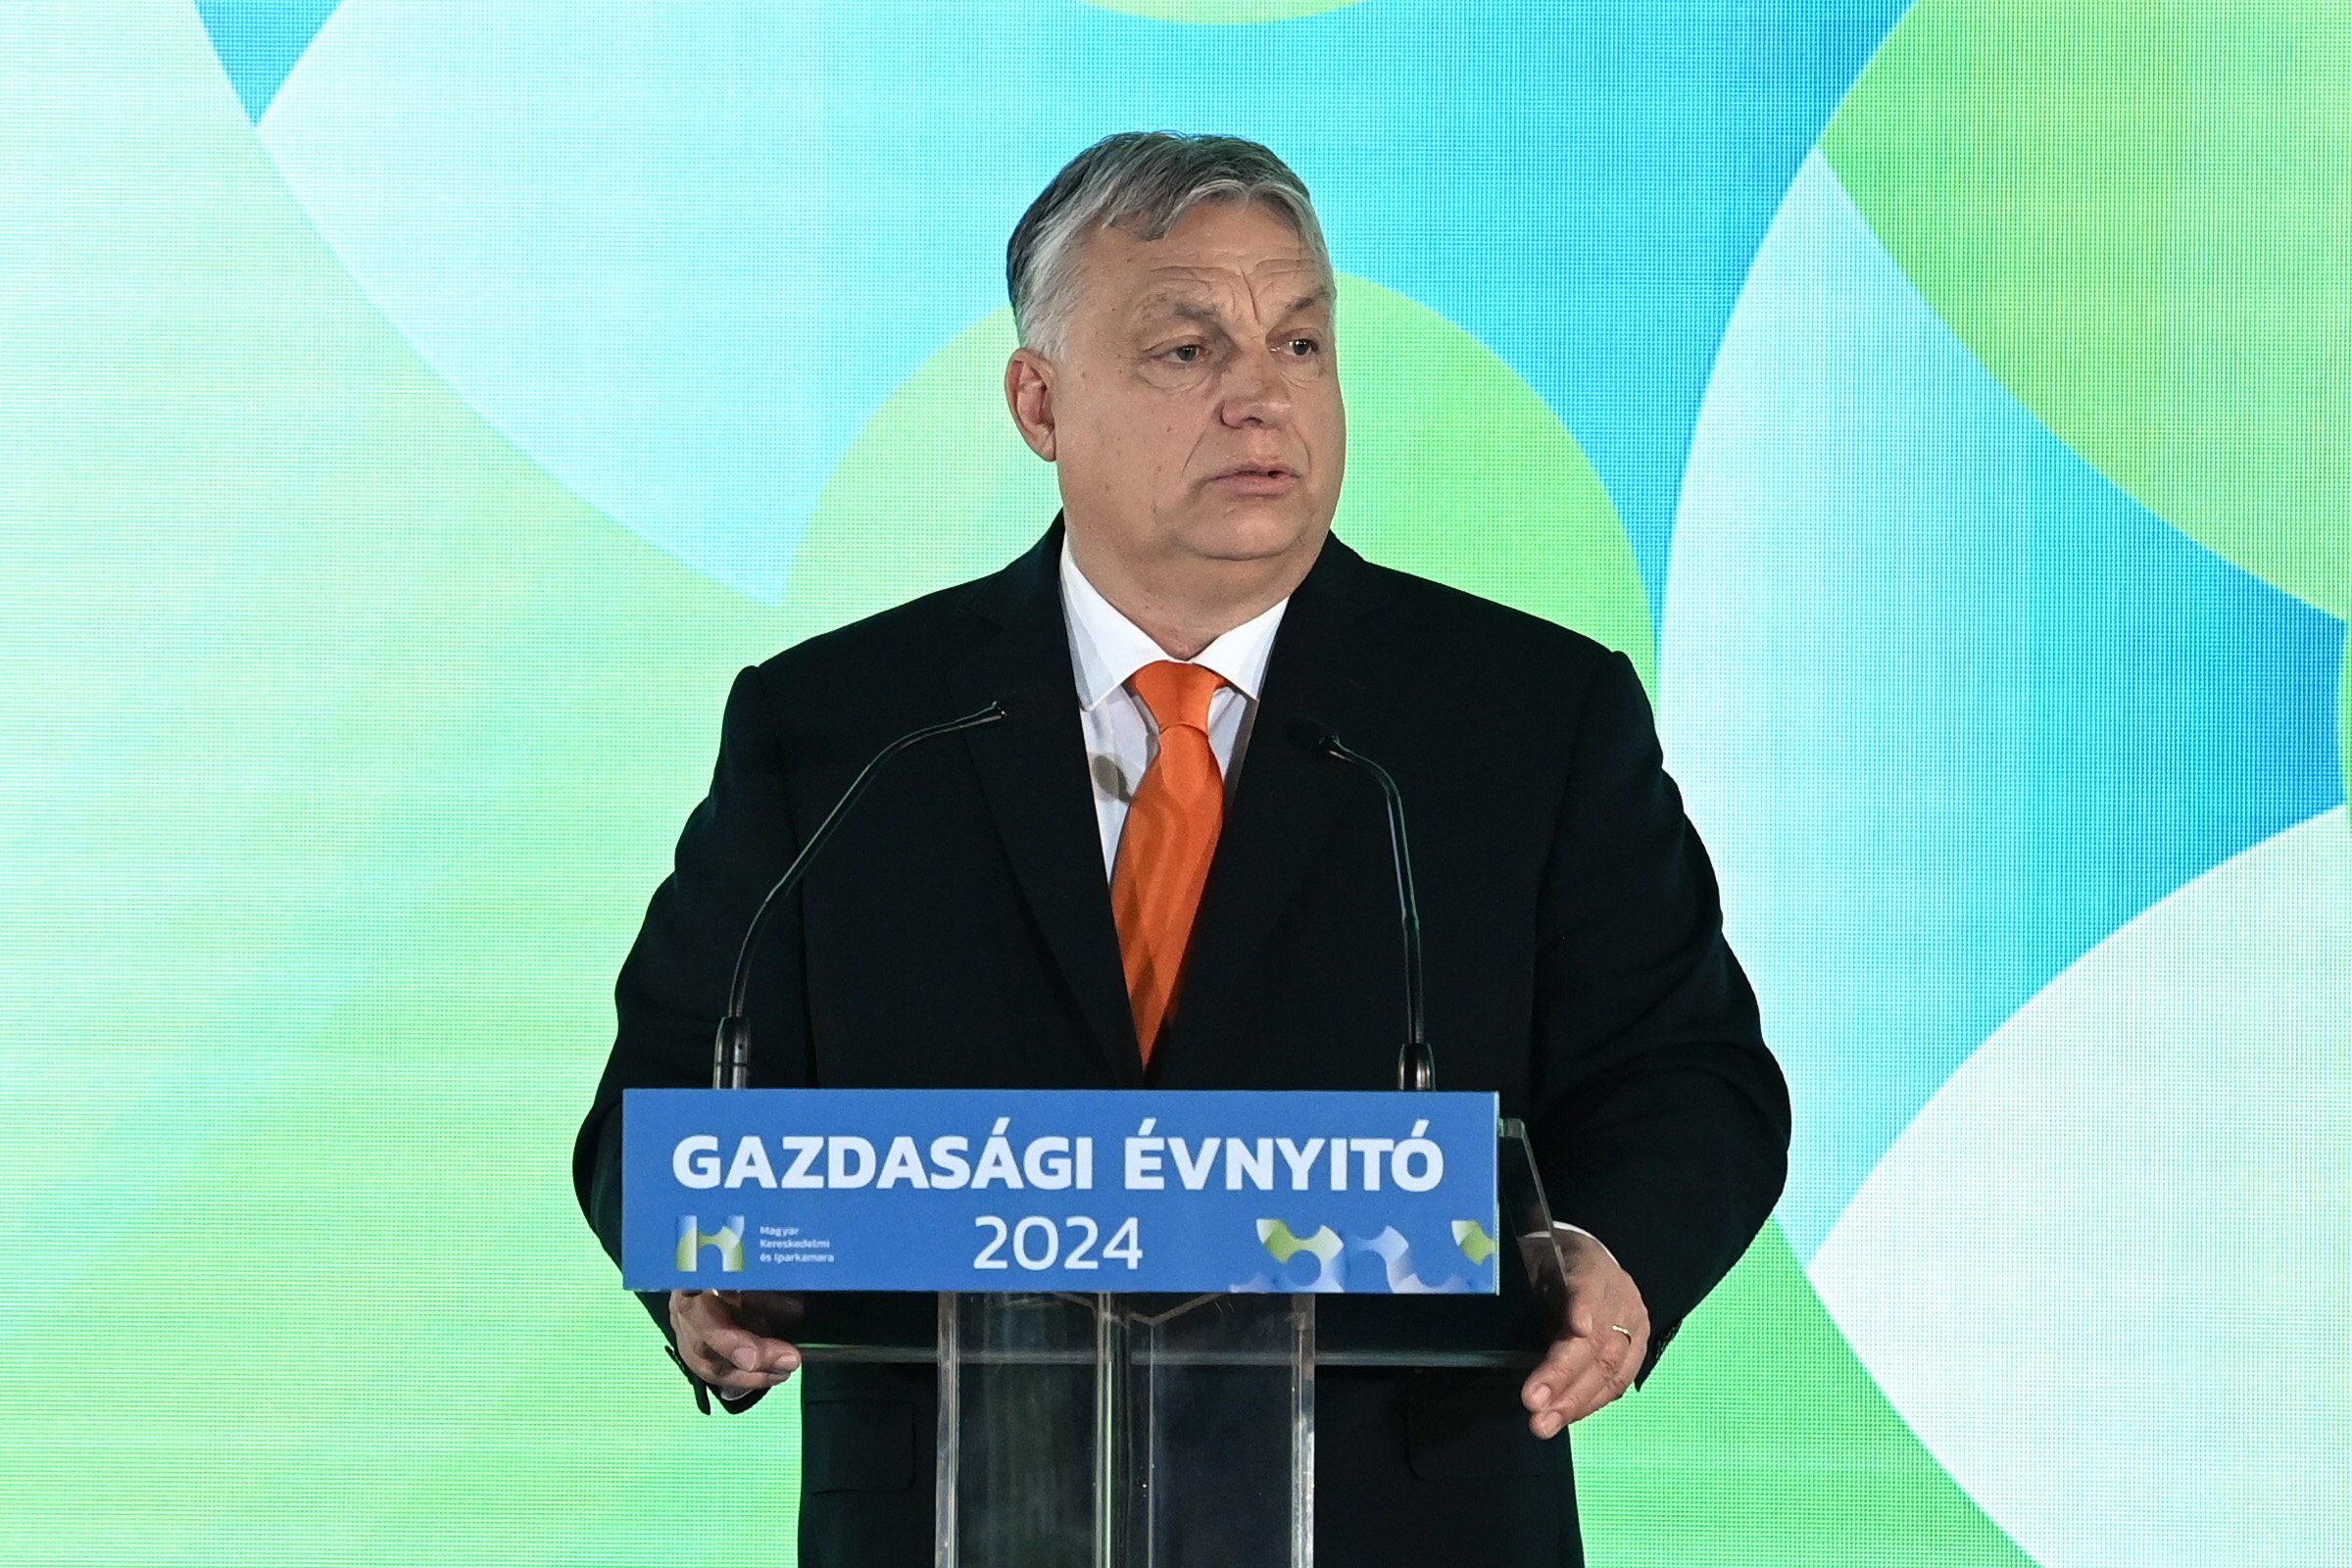 Viktor Orbán Is Calling for Economic Vigilance In 2024